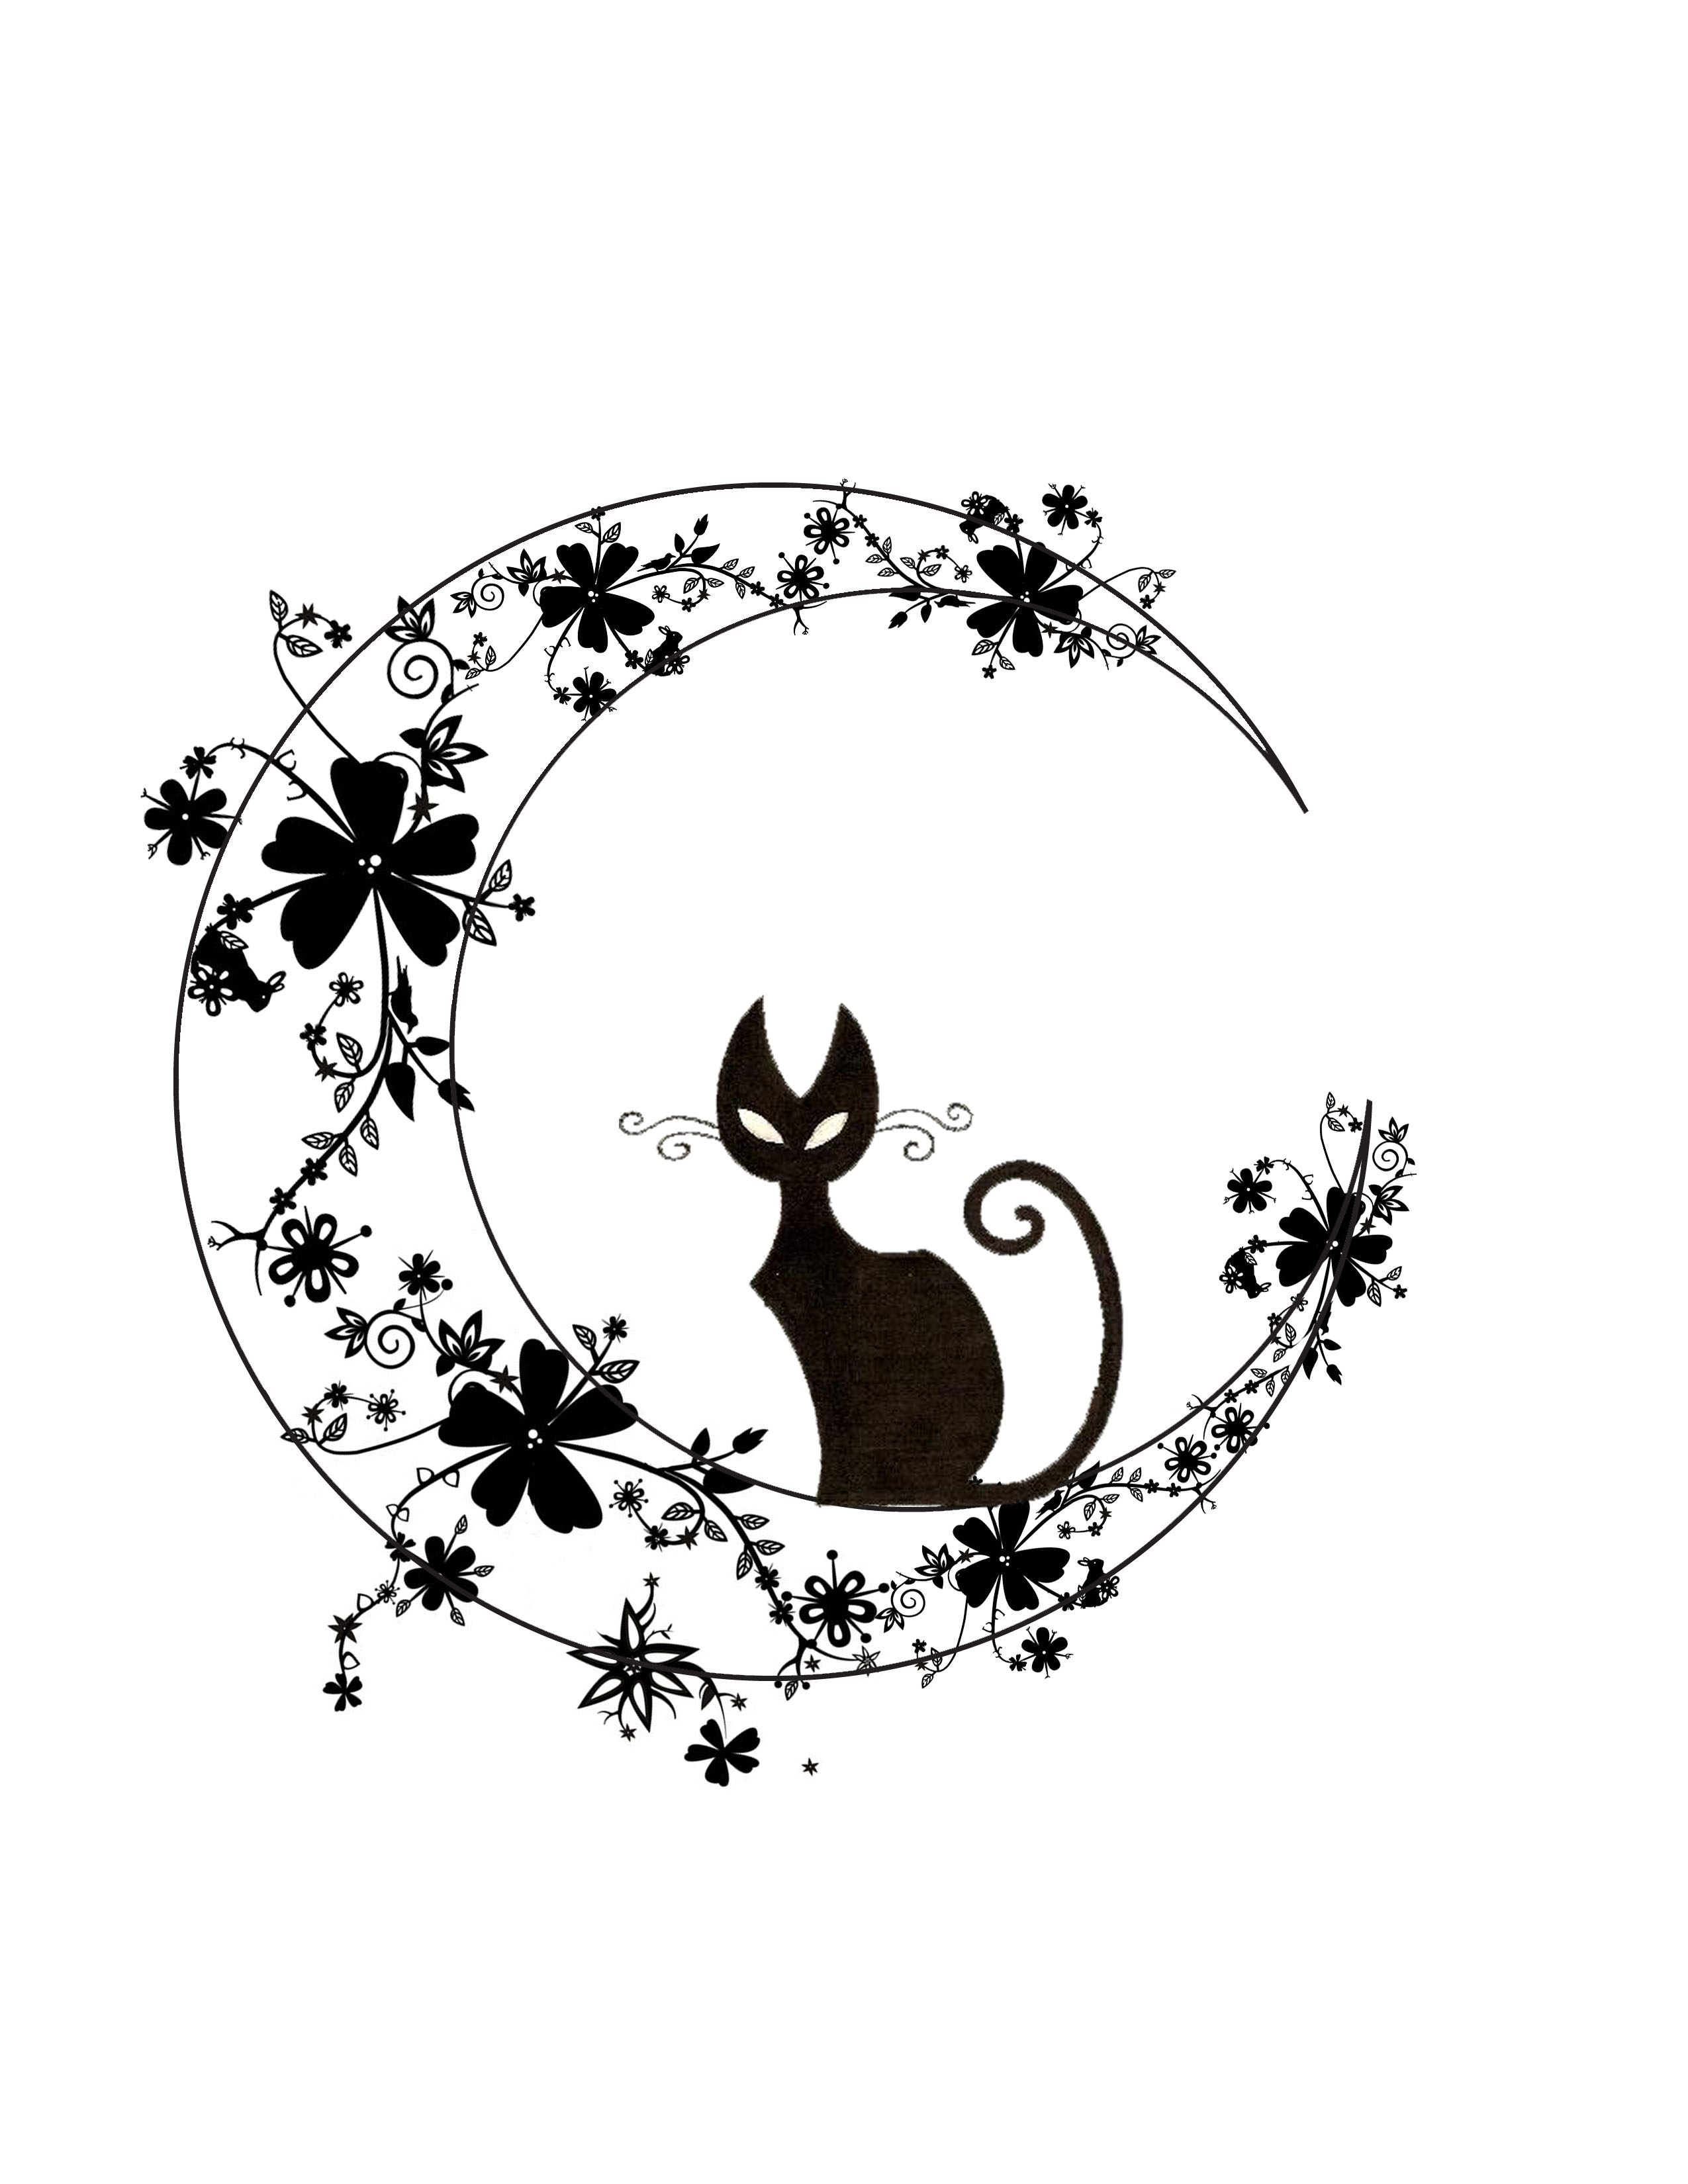 Halloween Black Cat Drawing at GetDrawings | Free download